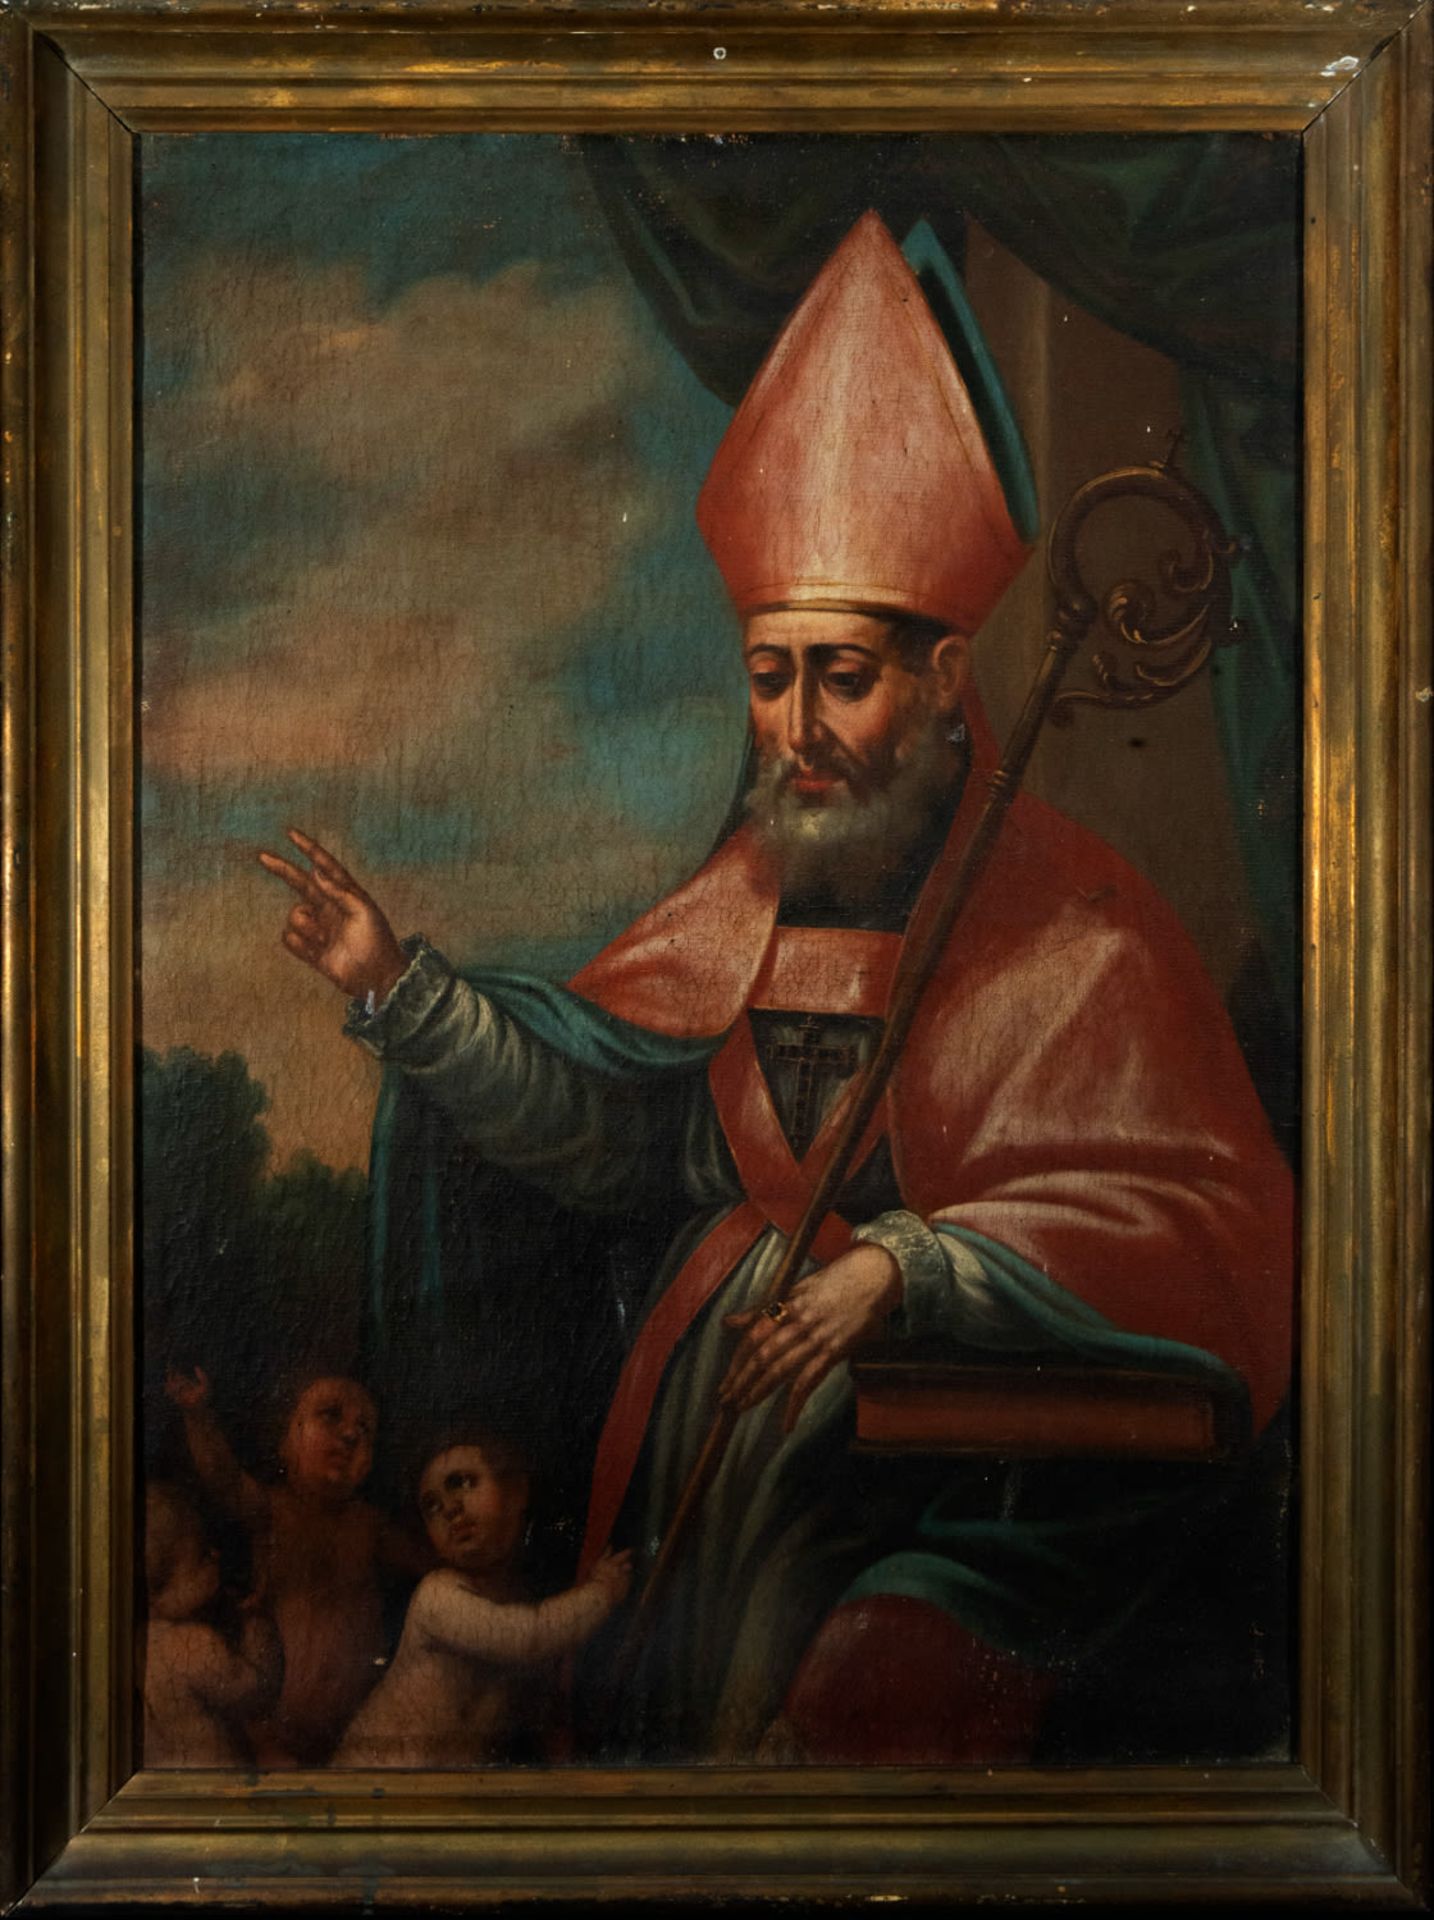 Saint Thomas Aquinas - Venetian School, oil on canvas, Italy, follower of Tintoretto, 16th - 17th ce